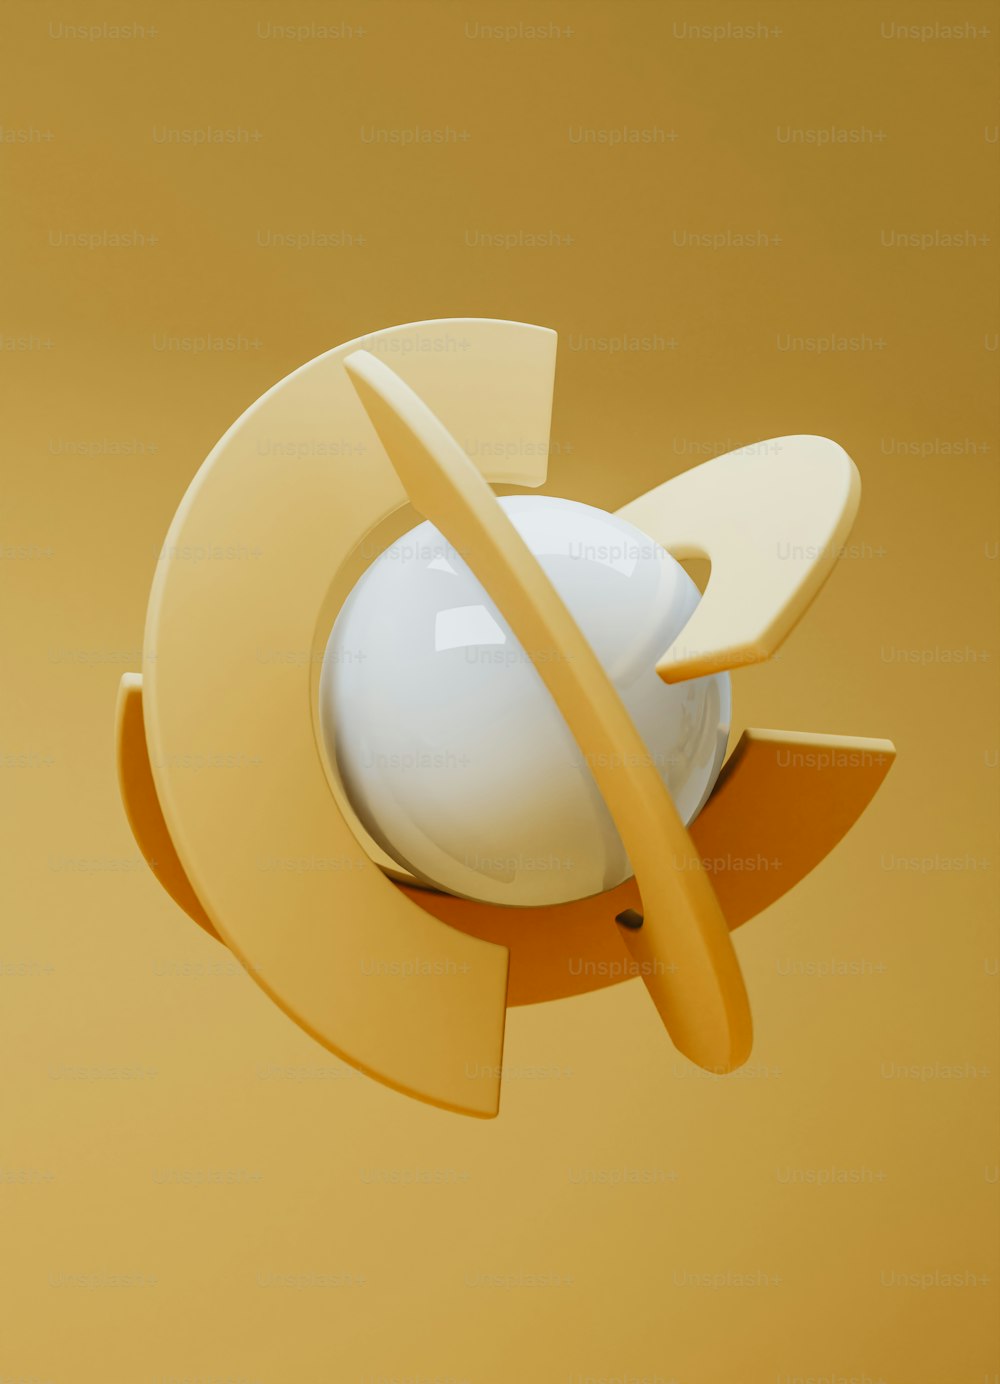 Un objeto blanco con un anillo amarillo a su alrededor